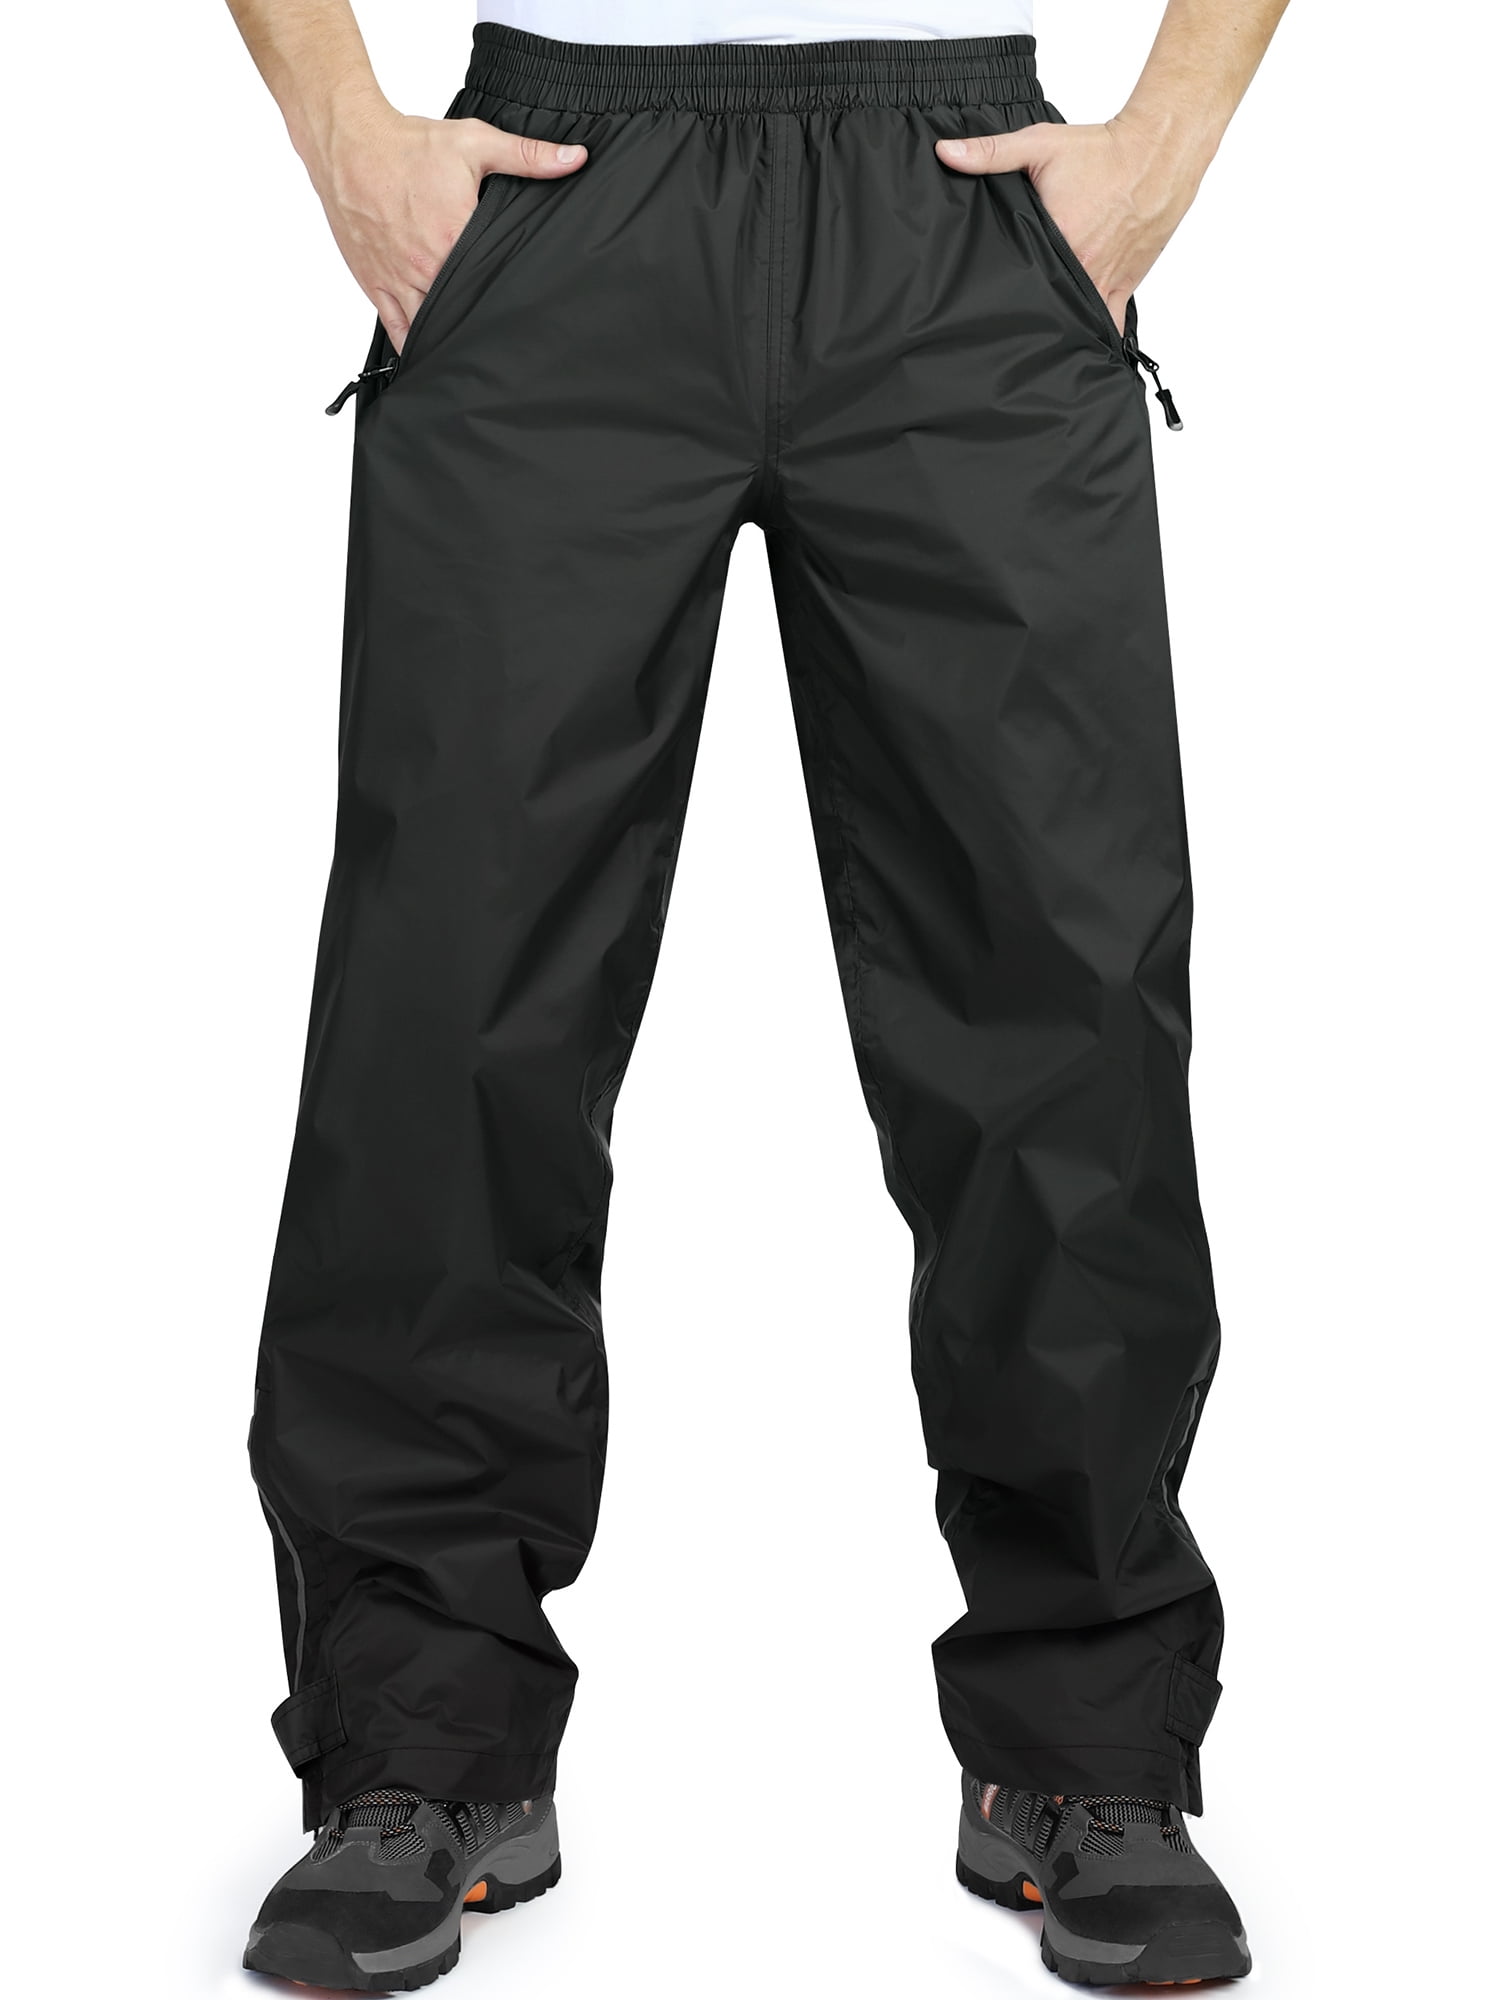 Wrangler Men's ATG Synthetic Relaxed Regular Fit Side Zip 5-Pocket Pants -  Brown, 32X30 